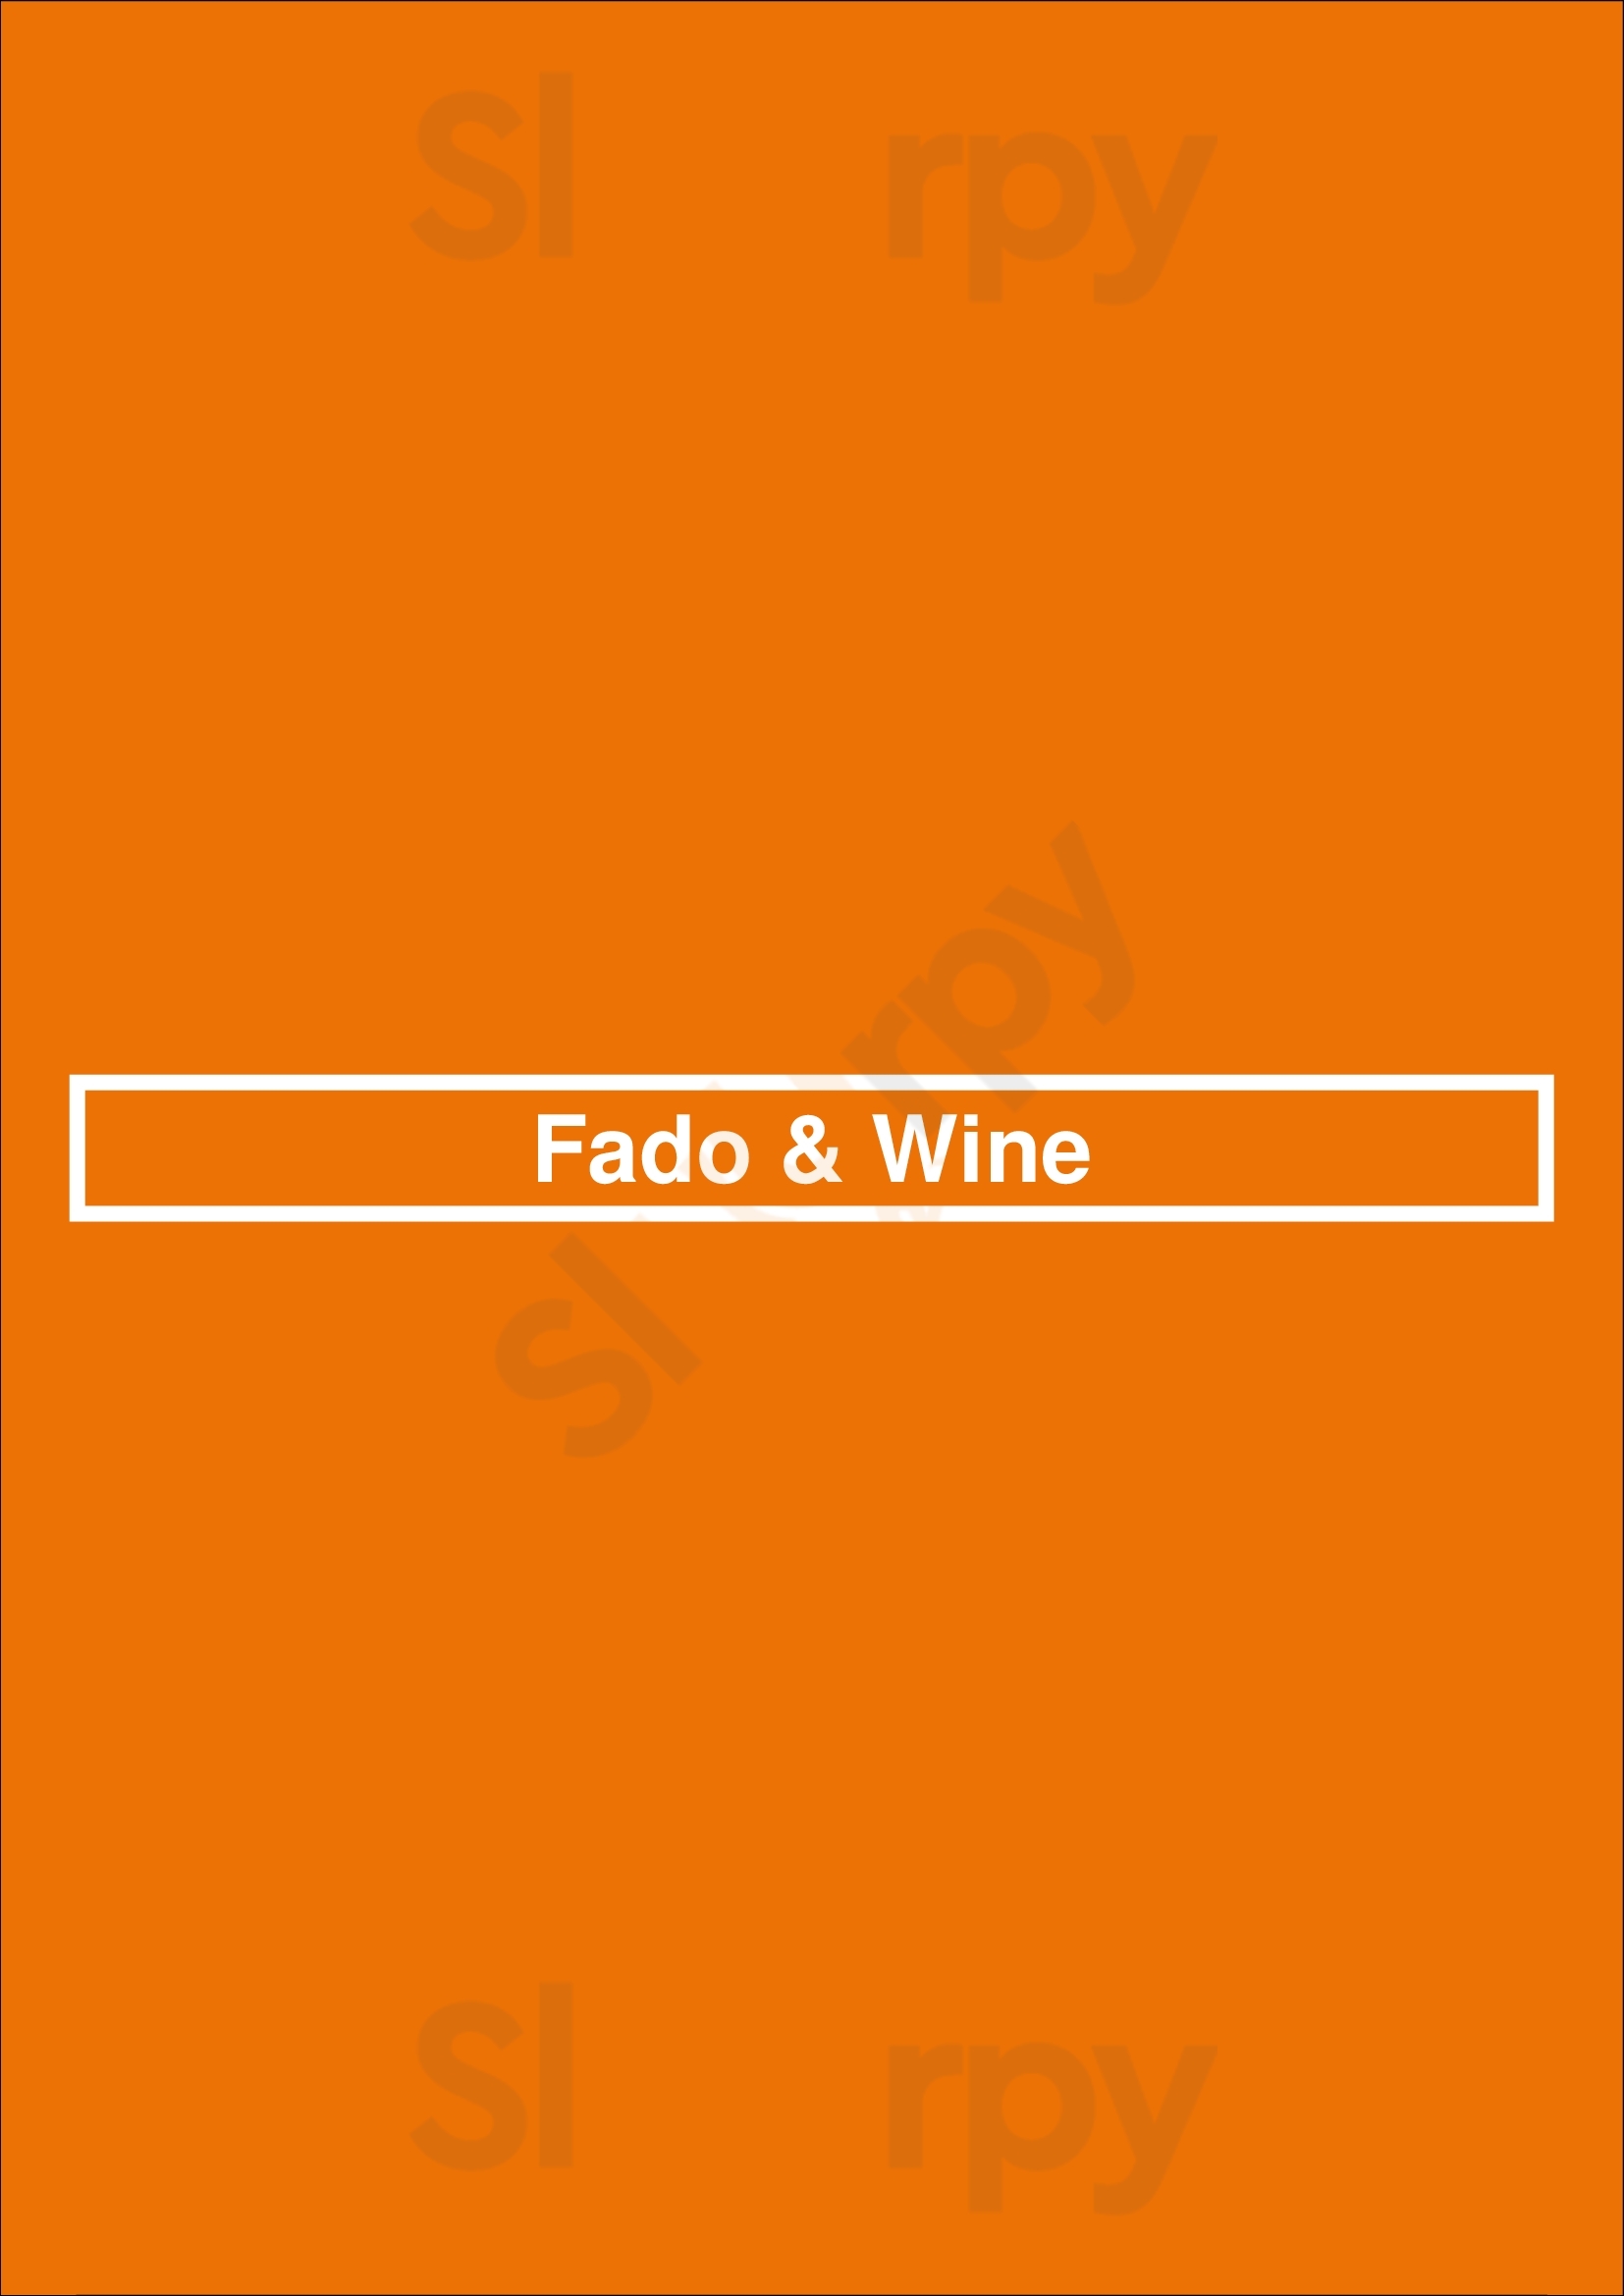 Fado & Wine Lisboa Menu - 1